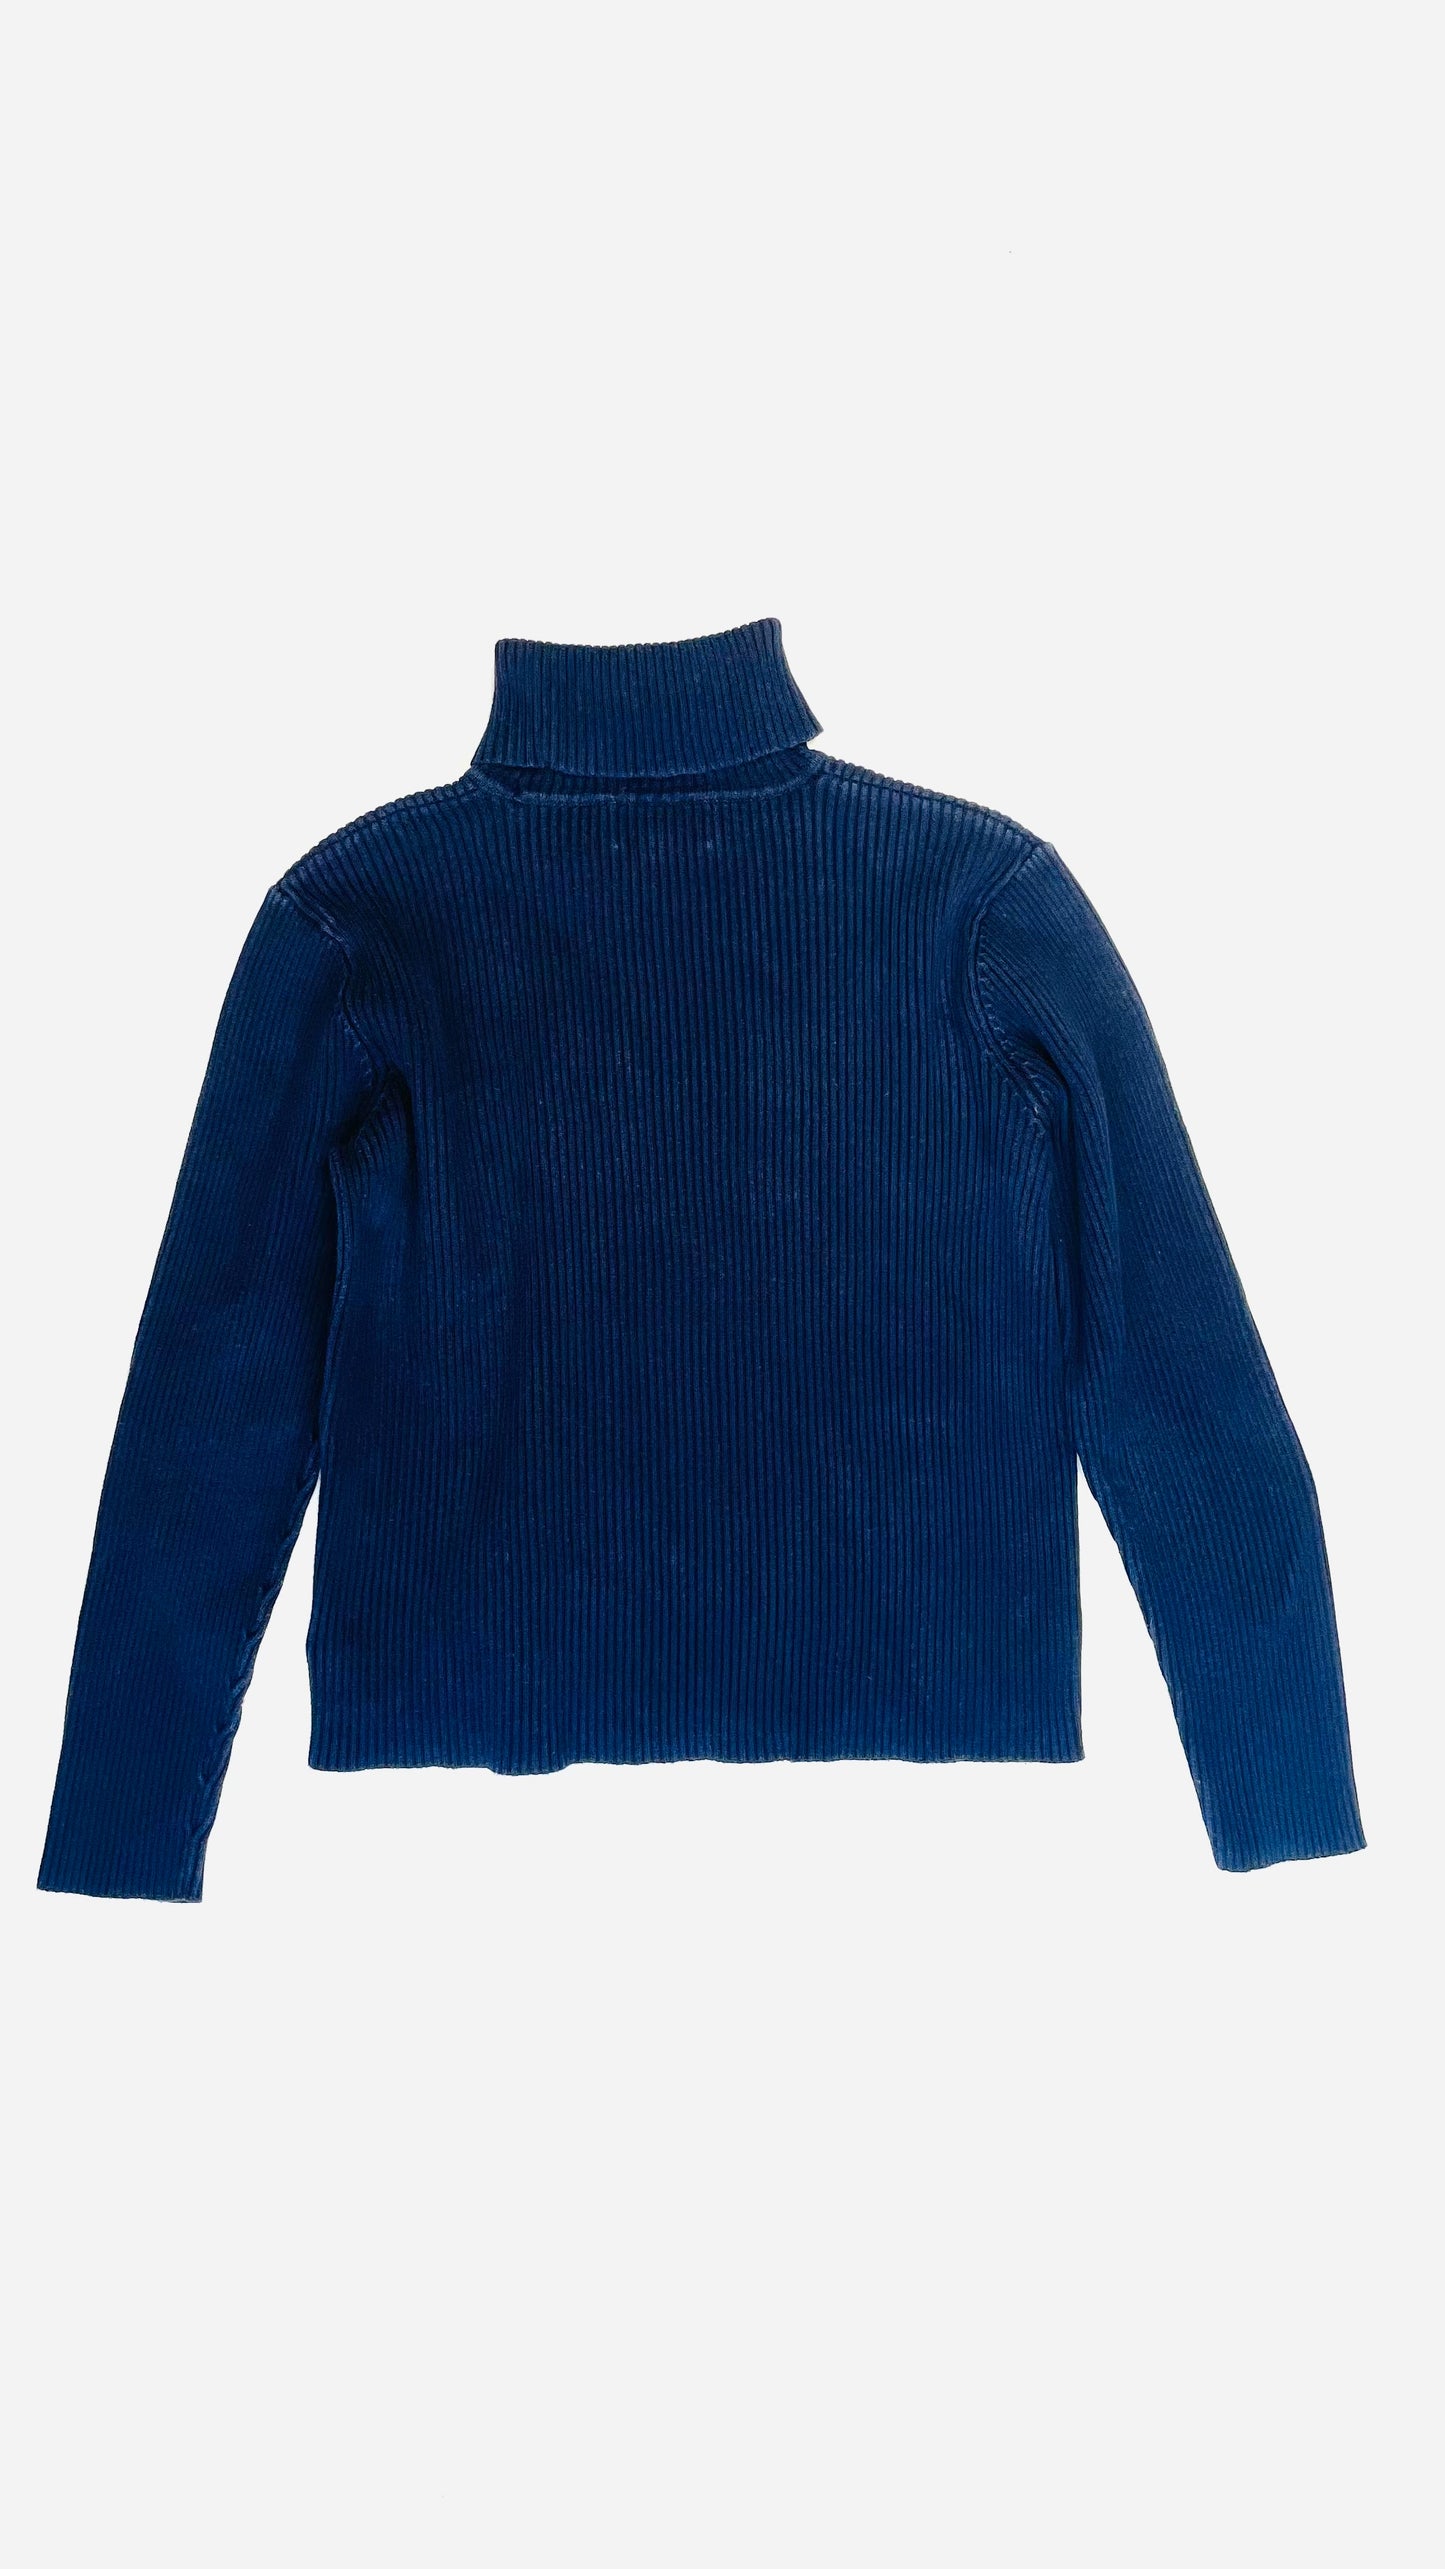 Vintage 90s Lauren Ralph Lauren navy rib knit turtleneck - Size M